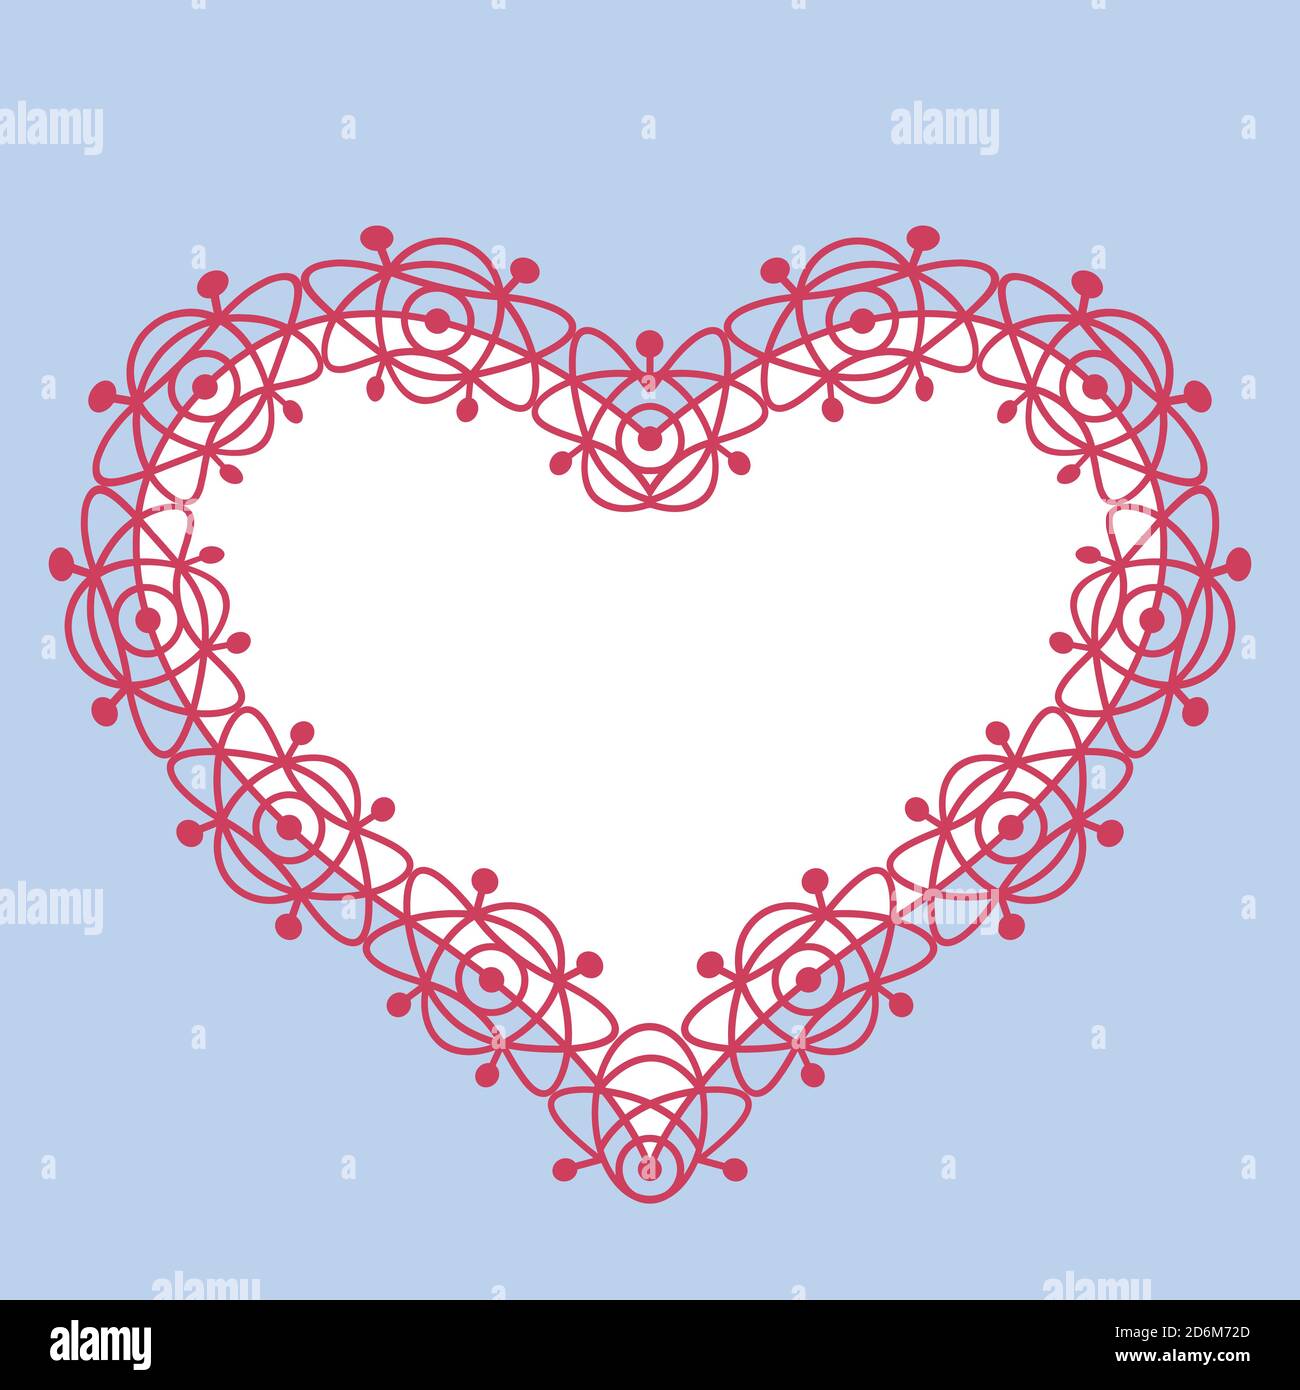 lace heart designs